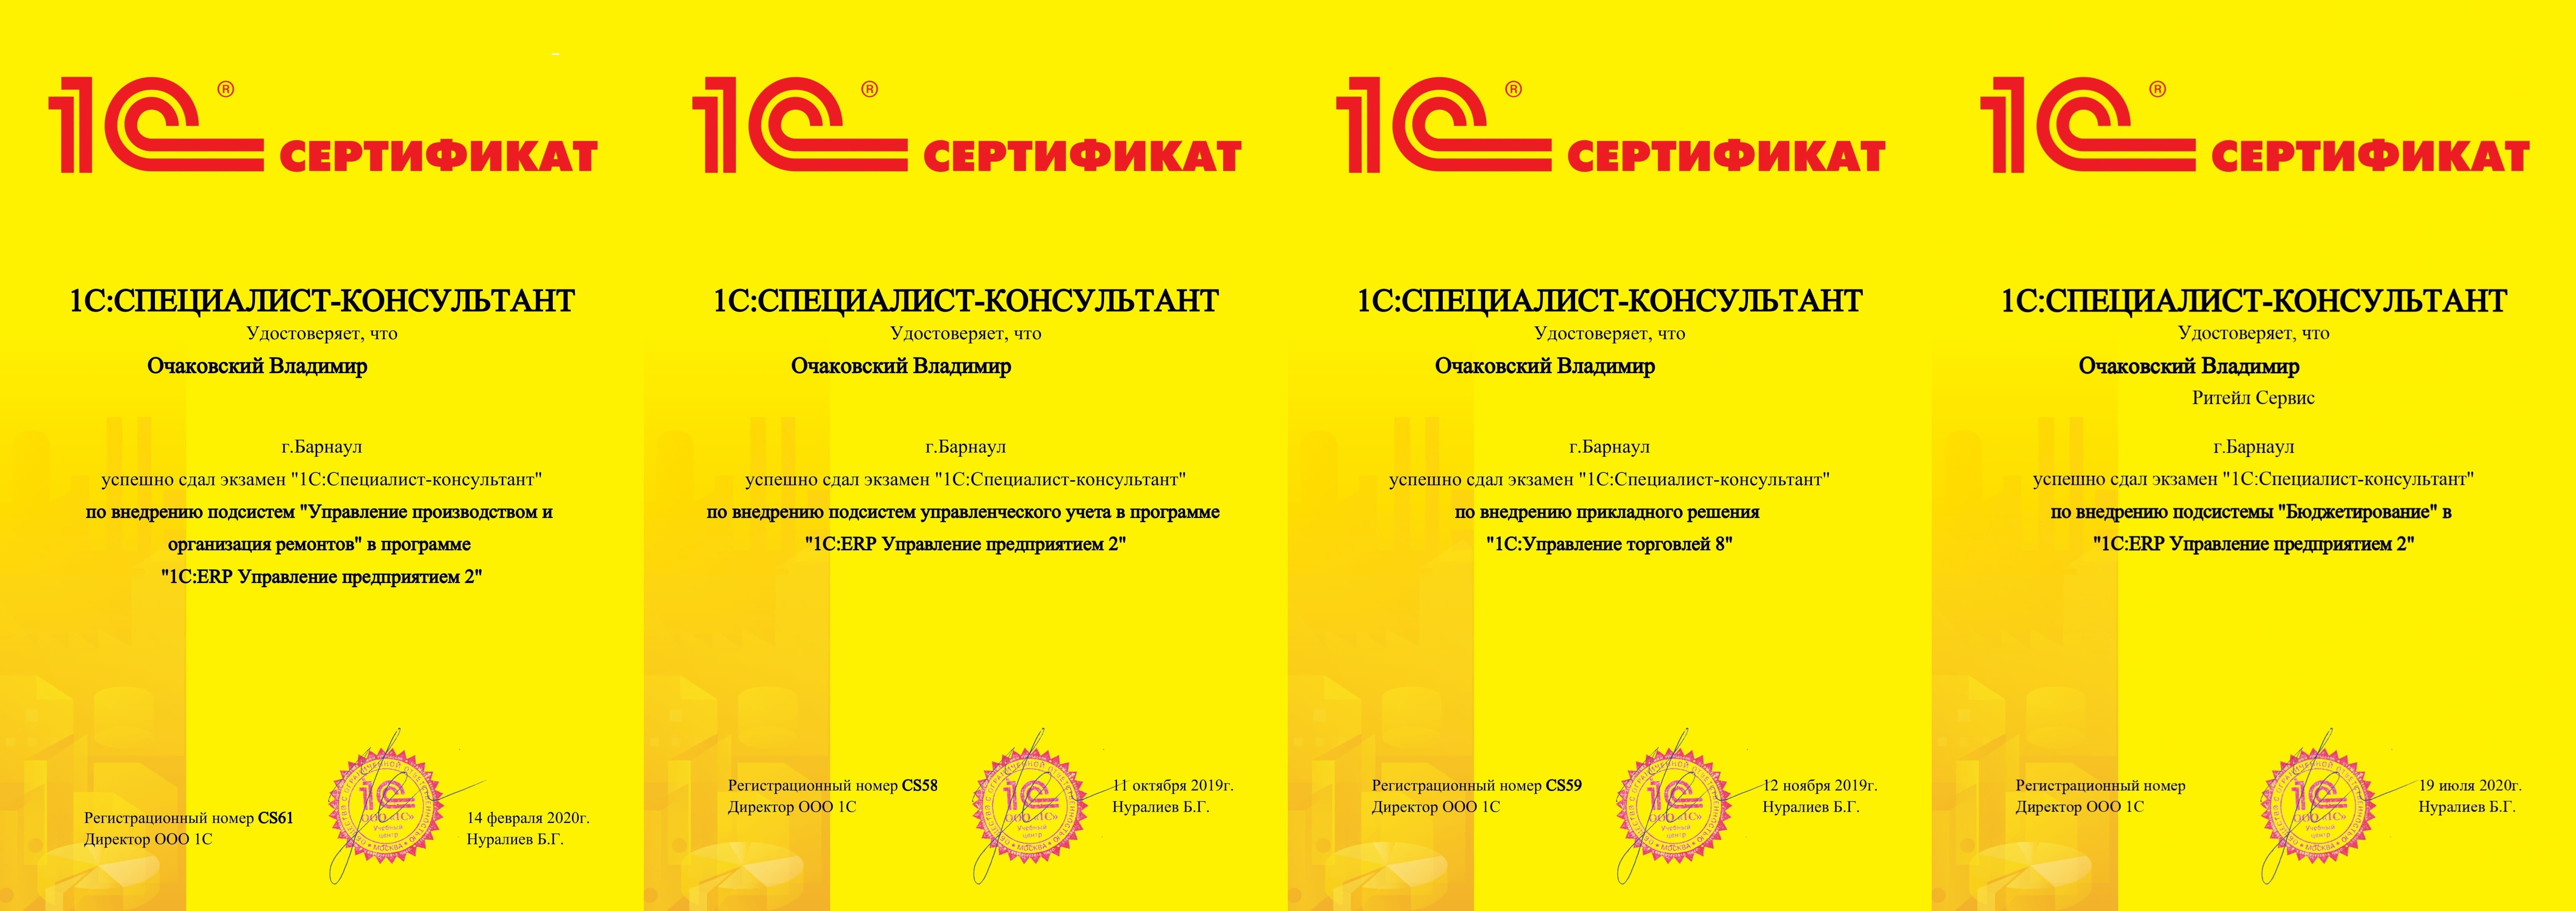 Сертификат специалист 1с ERP